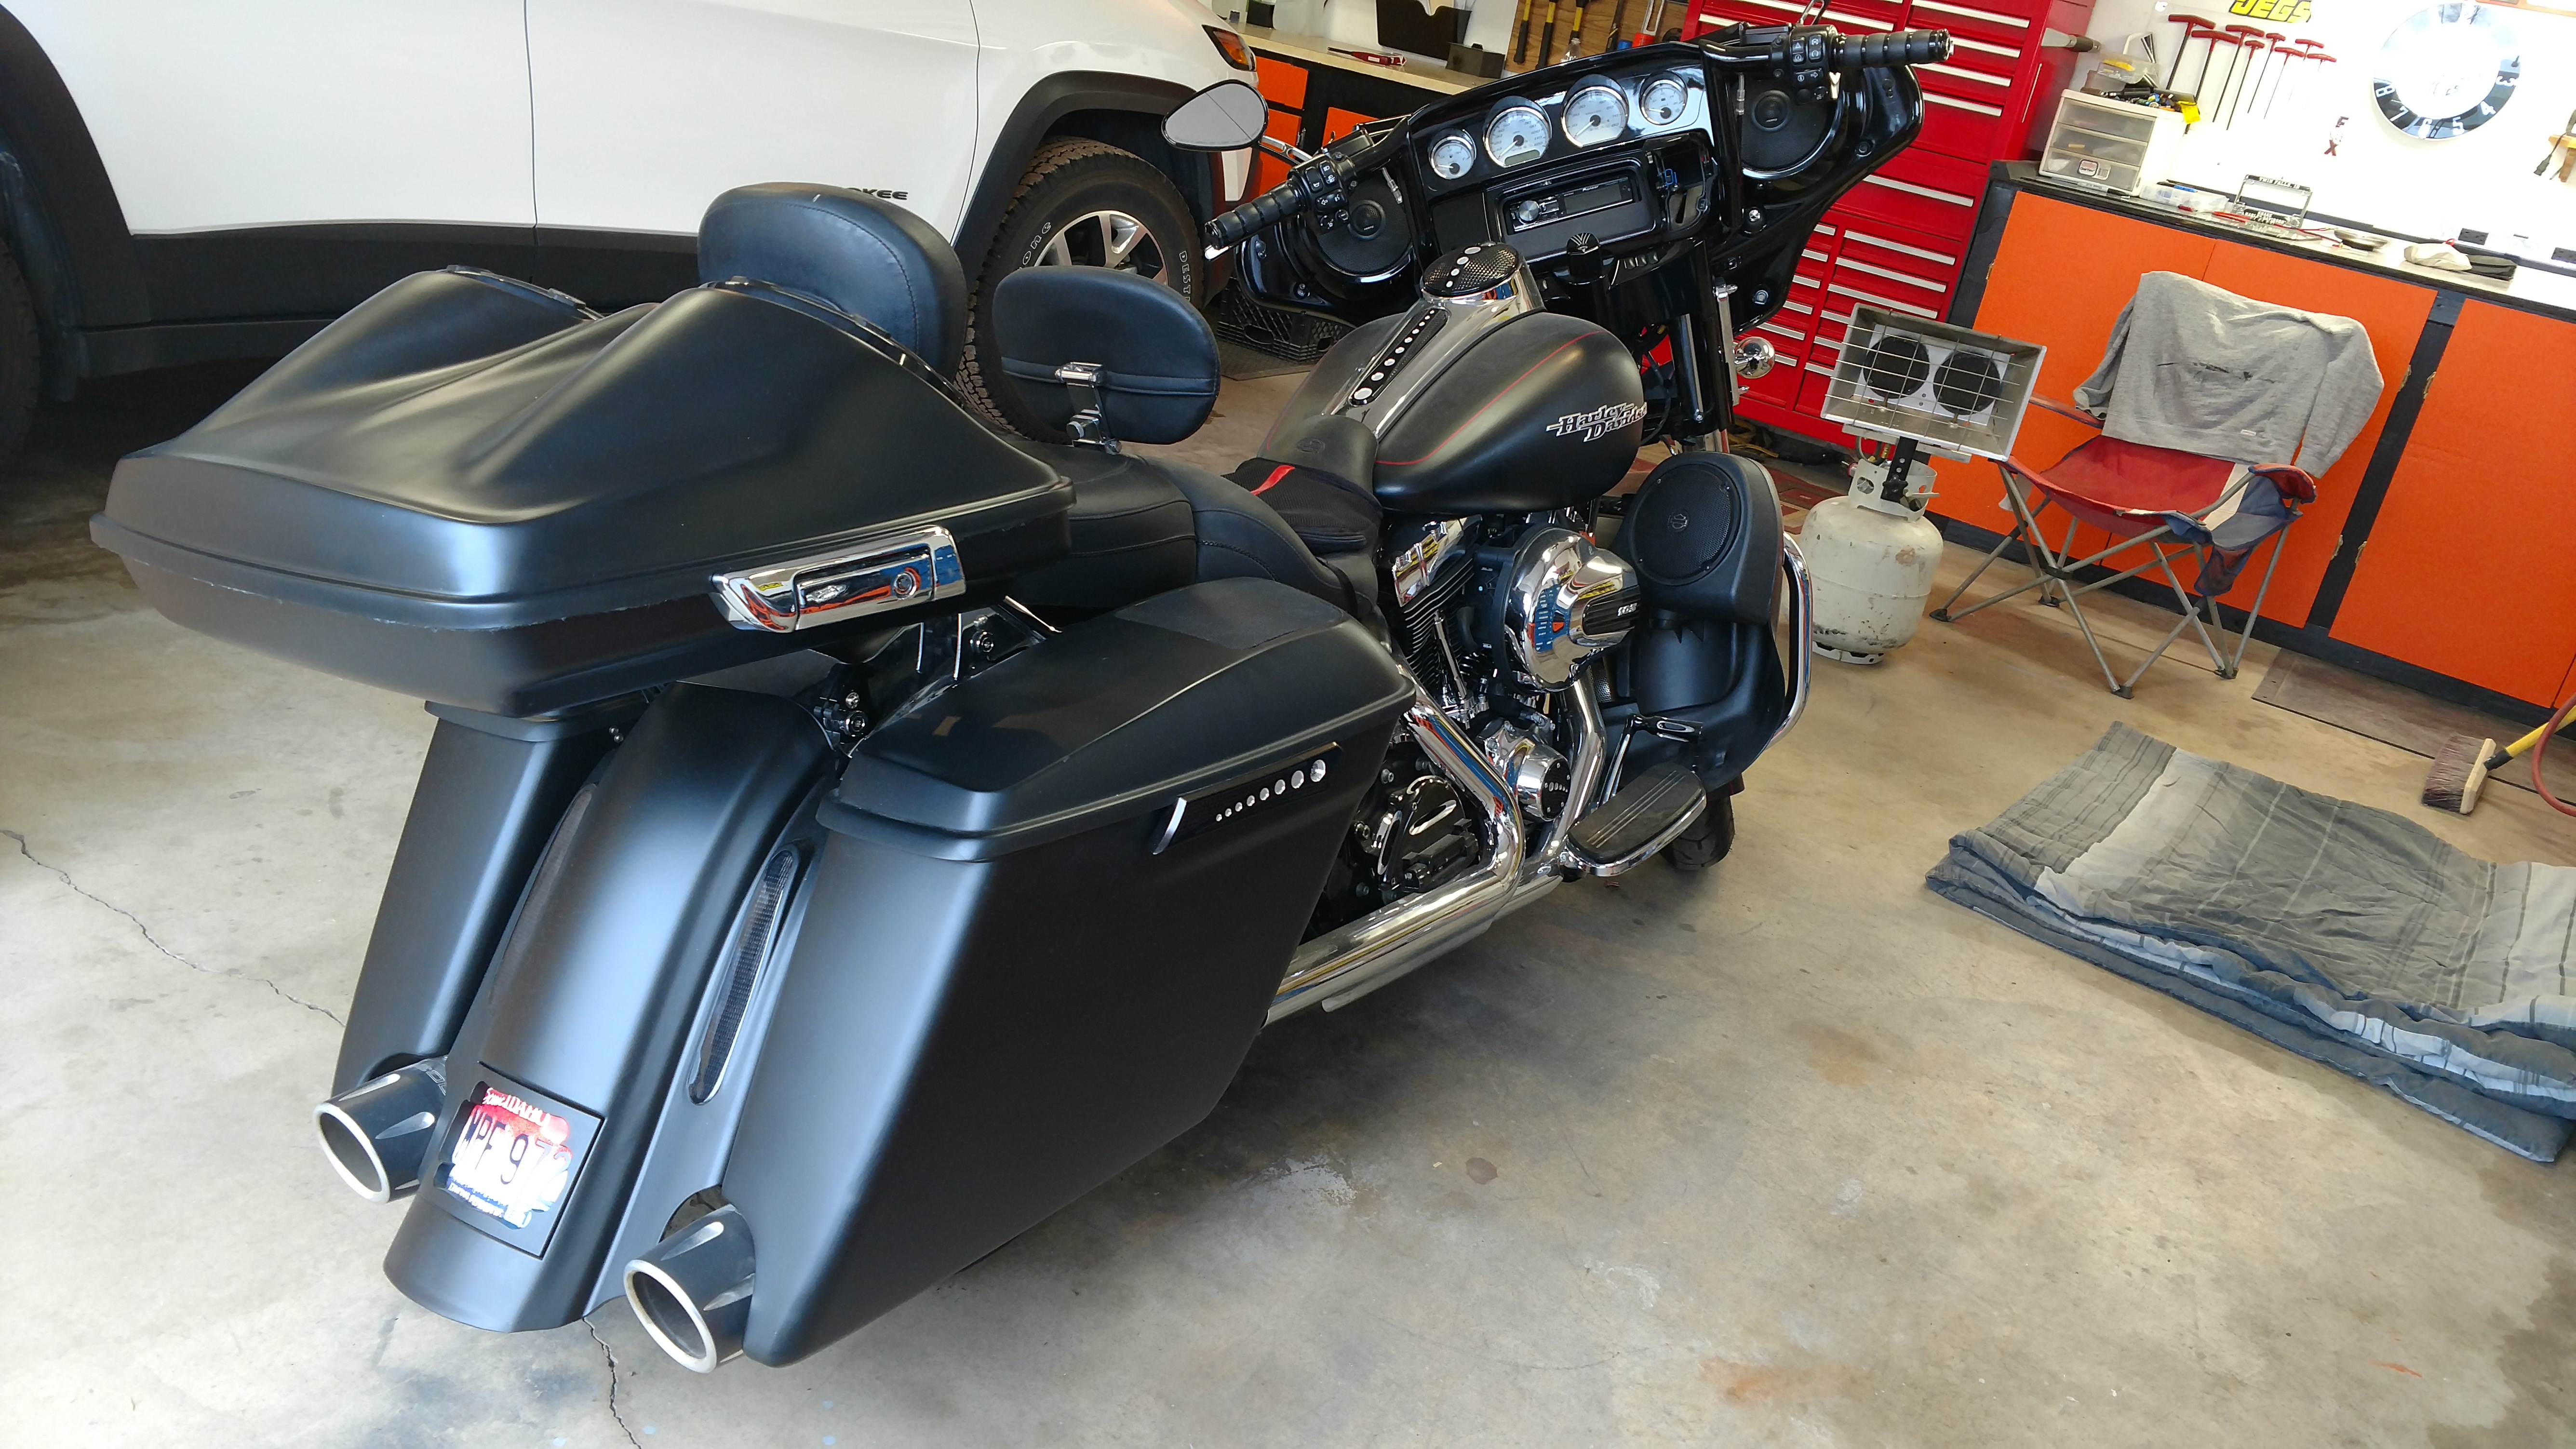 Fiberglass Bagger Harley Davidson Road Glide 6" Stretched bags & Rear